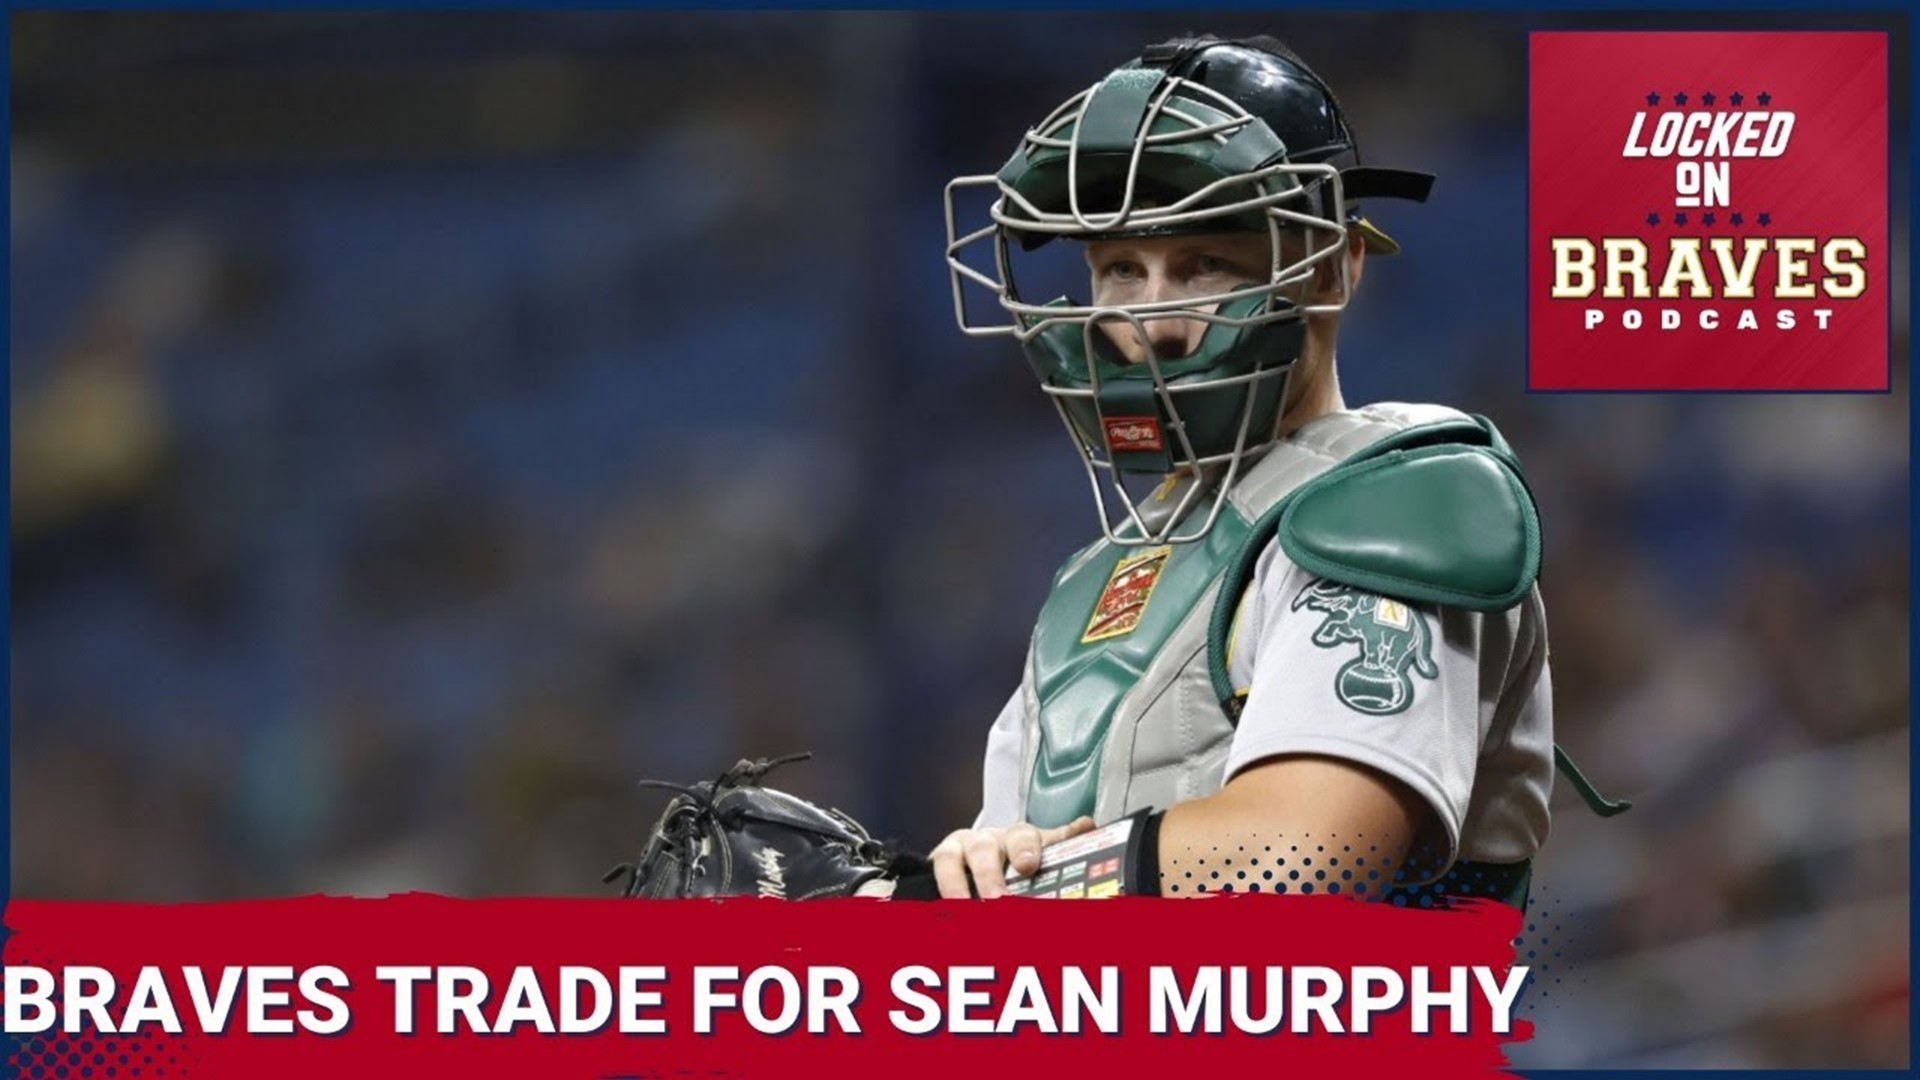 Atlanta Braves Trade for Sean Murphy in 3-team Deal